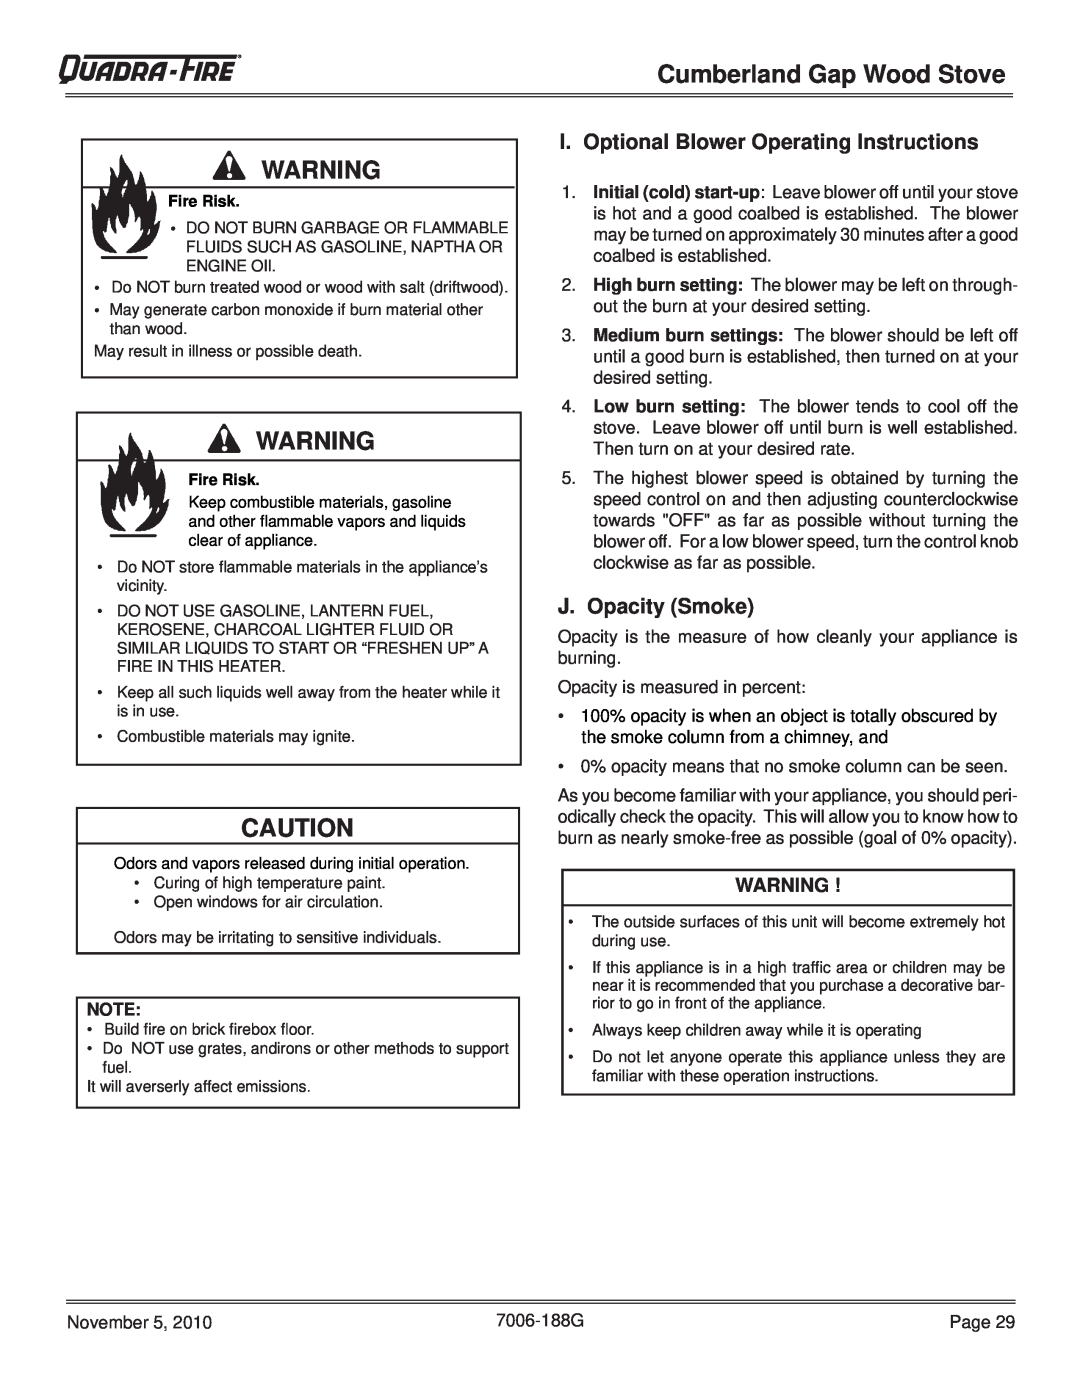 Quadra-Fire CUMBGAP-MBK, CUMPGAP-PMH I.Optional Blower Operating Instructions, J. Opacity Smoke, Cumberland Gap Wood Stove 